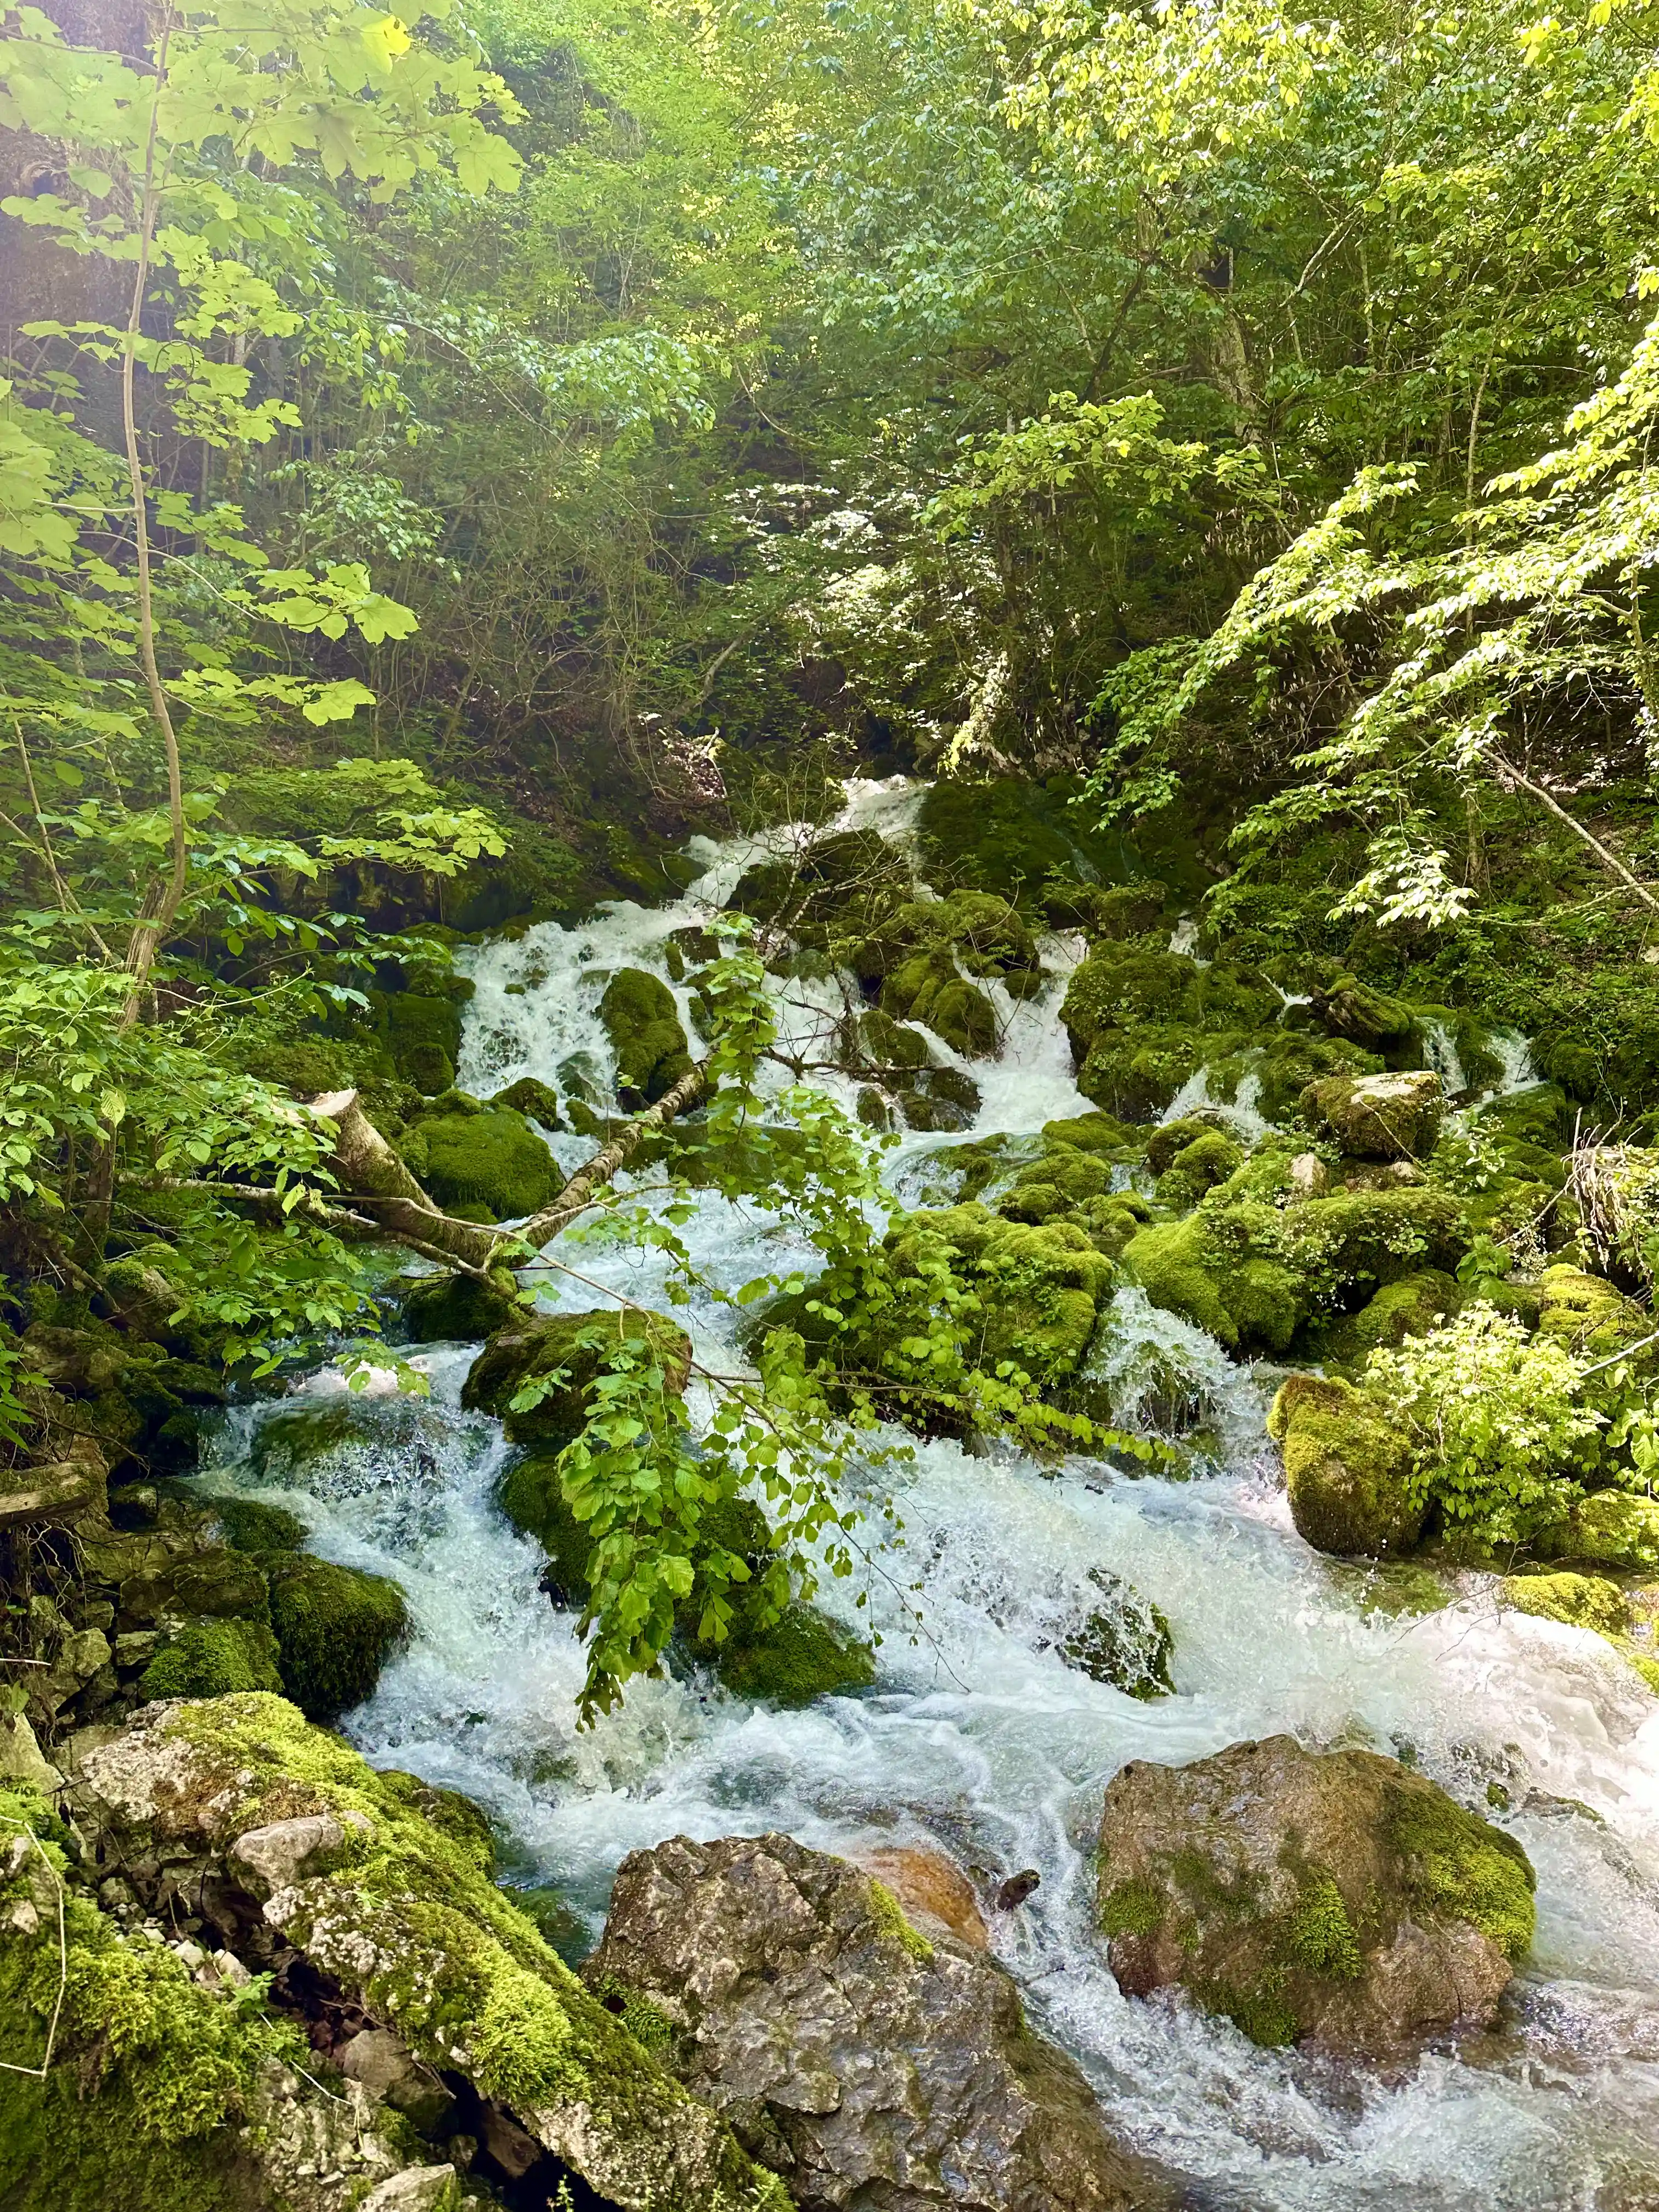 Imagine Durmitor National Park in Montenegro